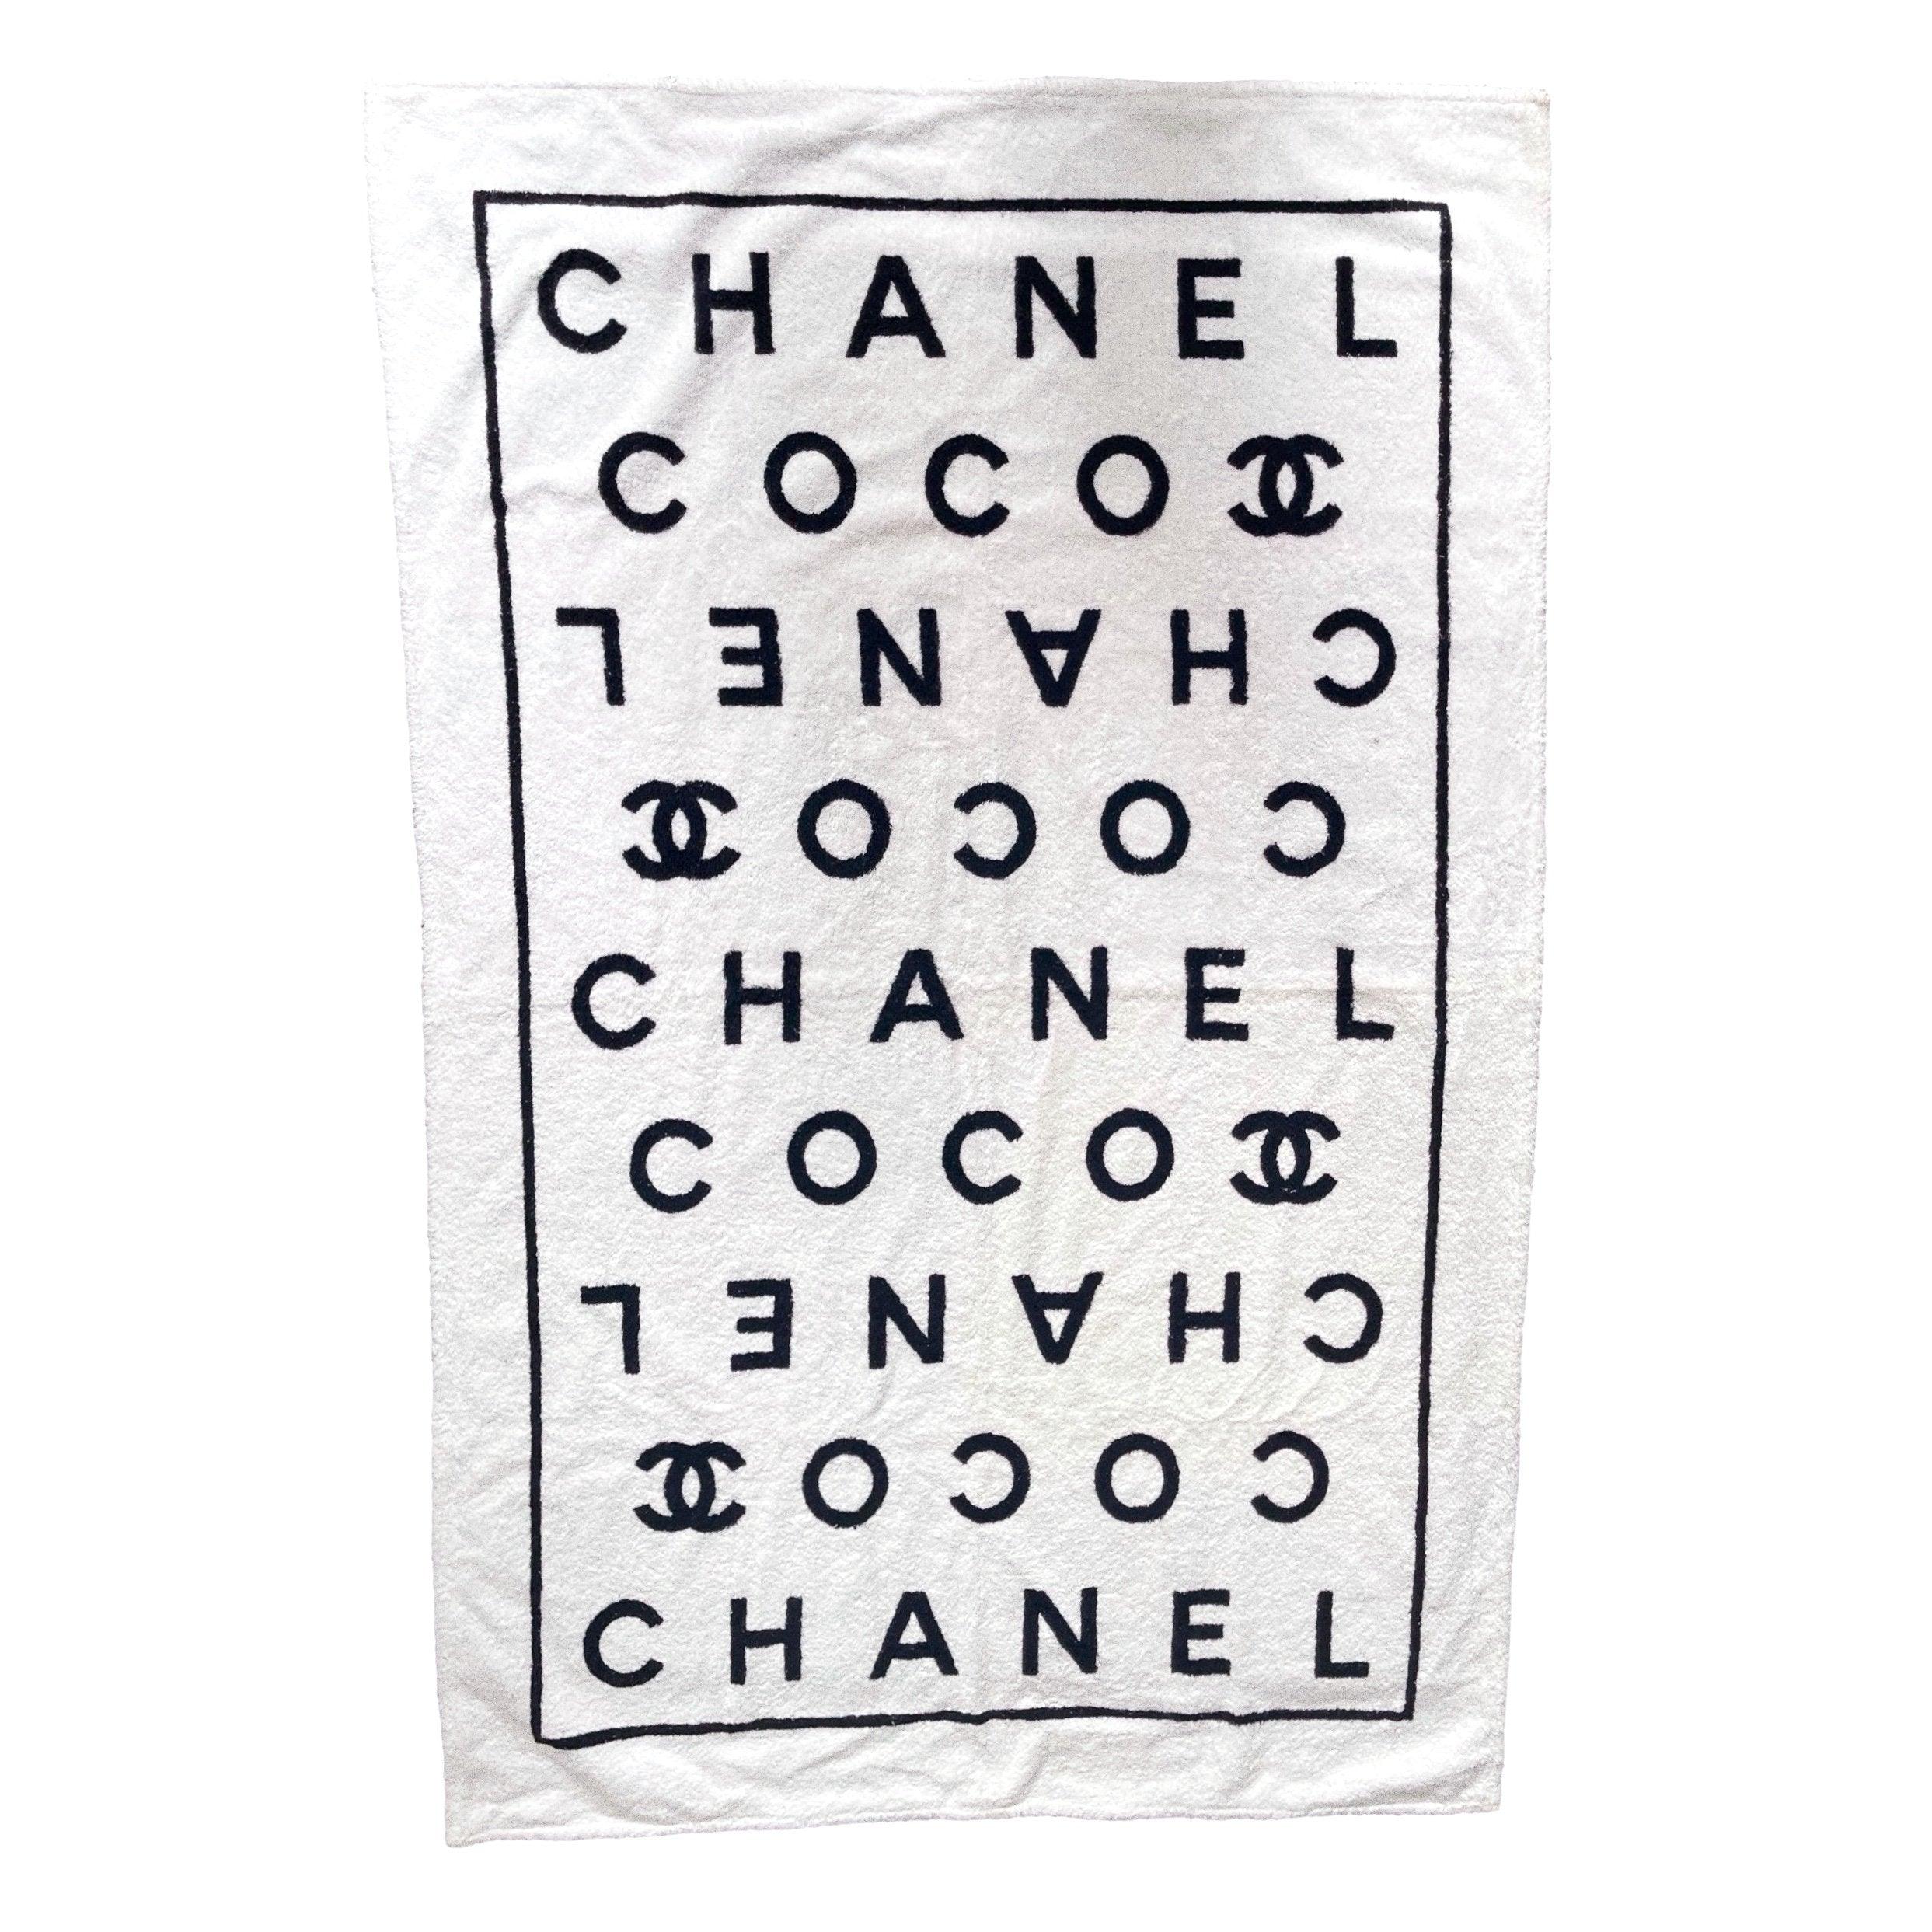 CHANEL, Bath, Chanel Coco Cuba Beach Towel